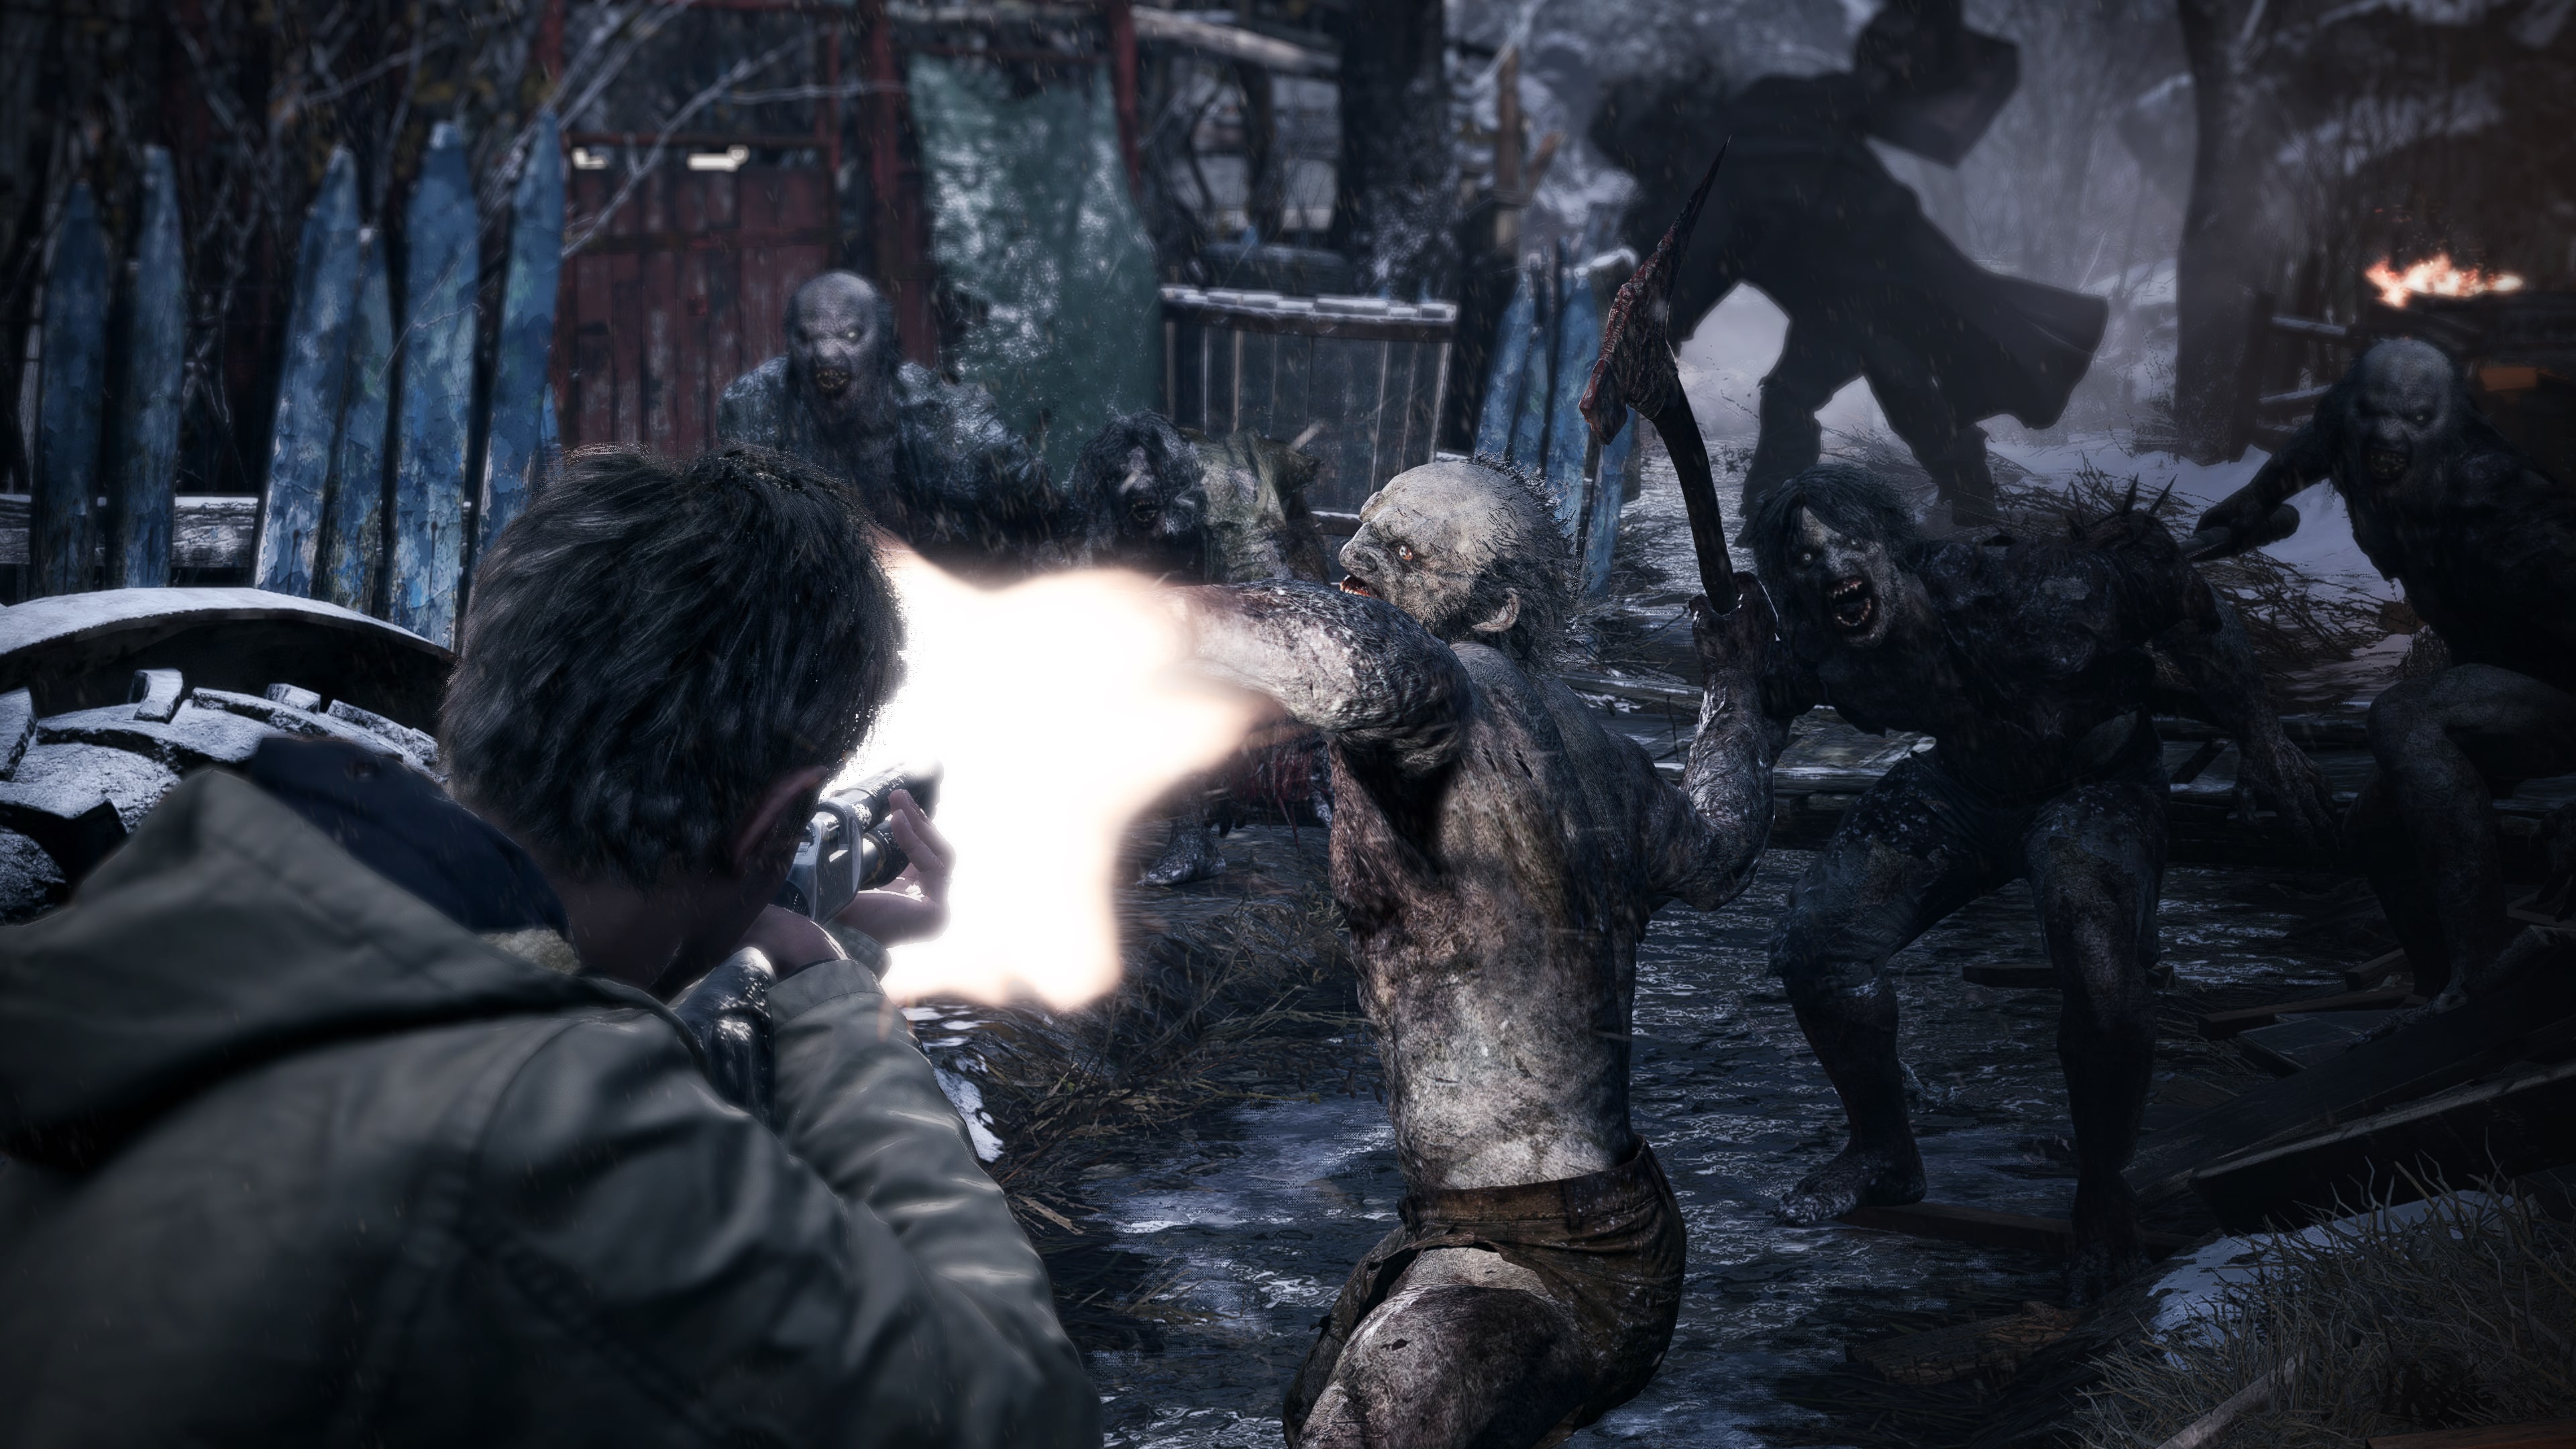 Resident Evil Village (PS5) : Video Games 